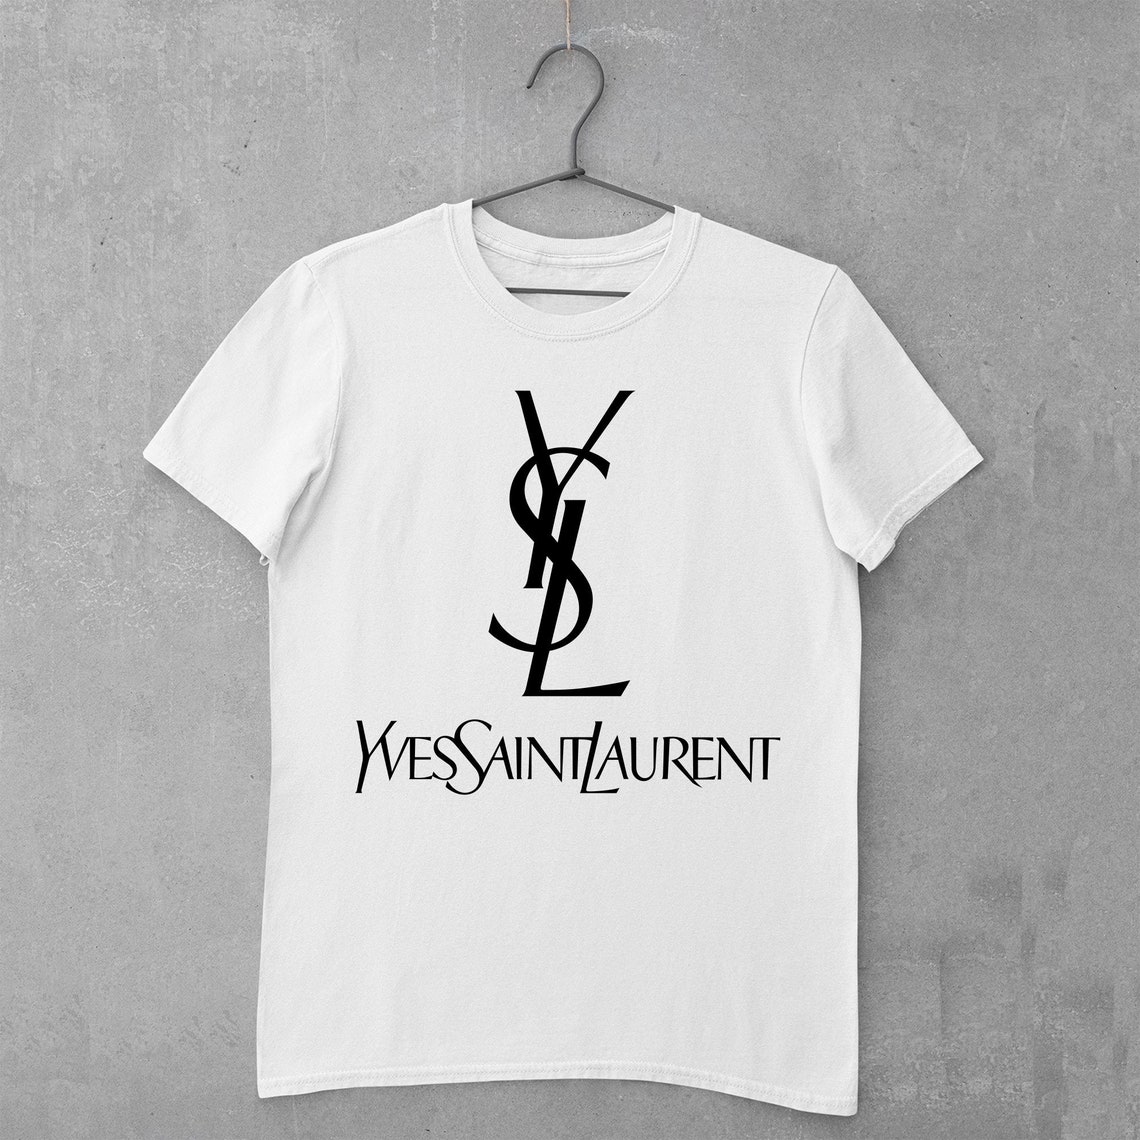 Ysl Yves Saint Laurent Vintage Tshirt Ysl Yves Saint Laurent | Etsy